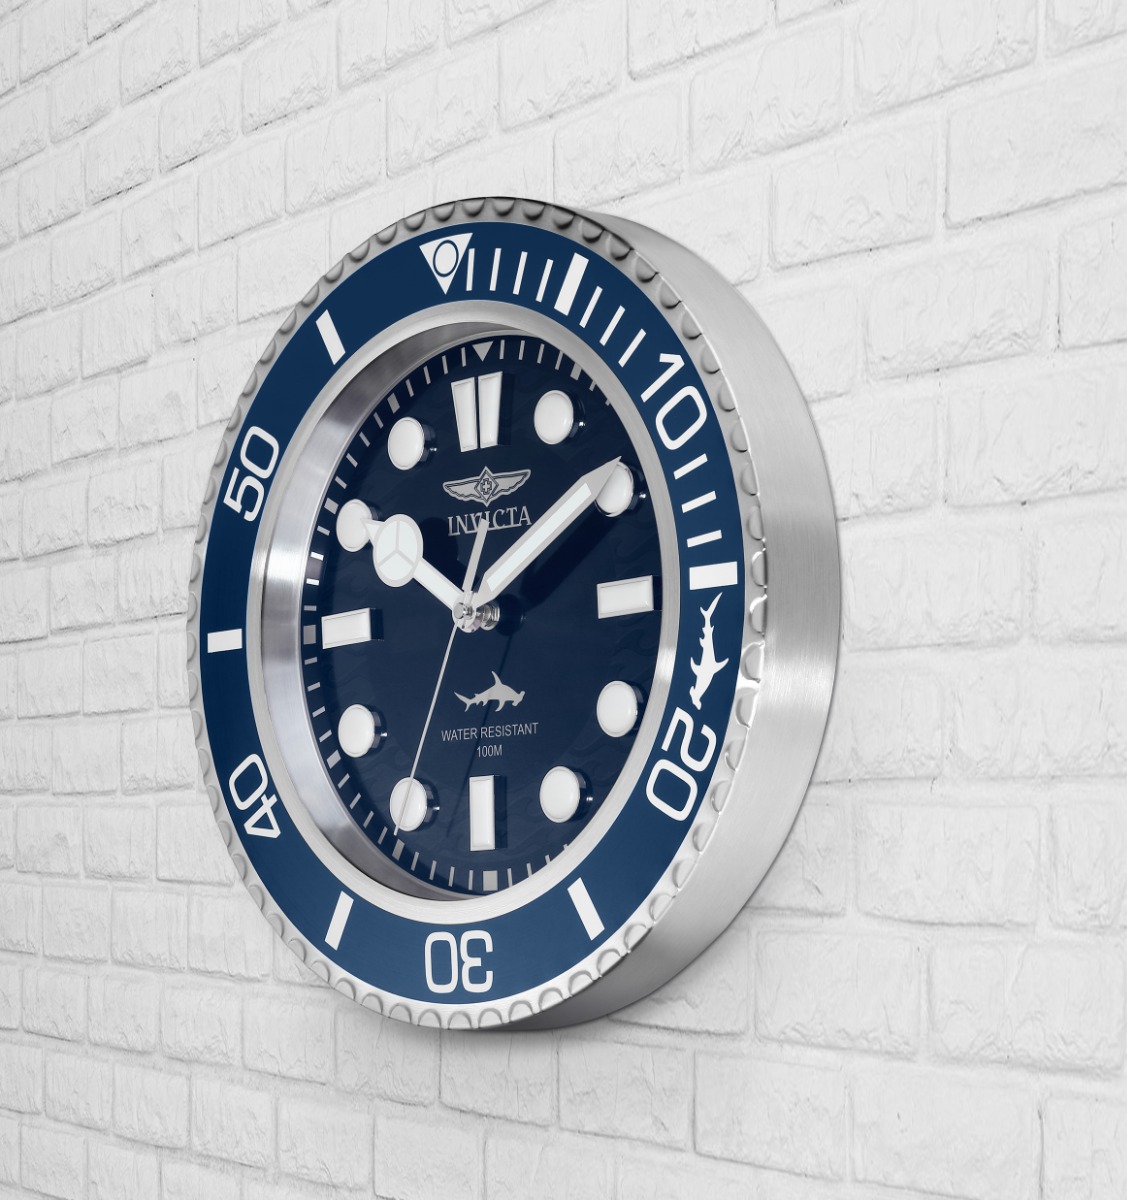 Invicta Pro Diver Wall Clock - 485mm, (33774)